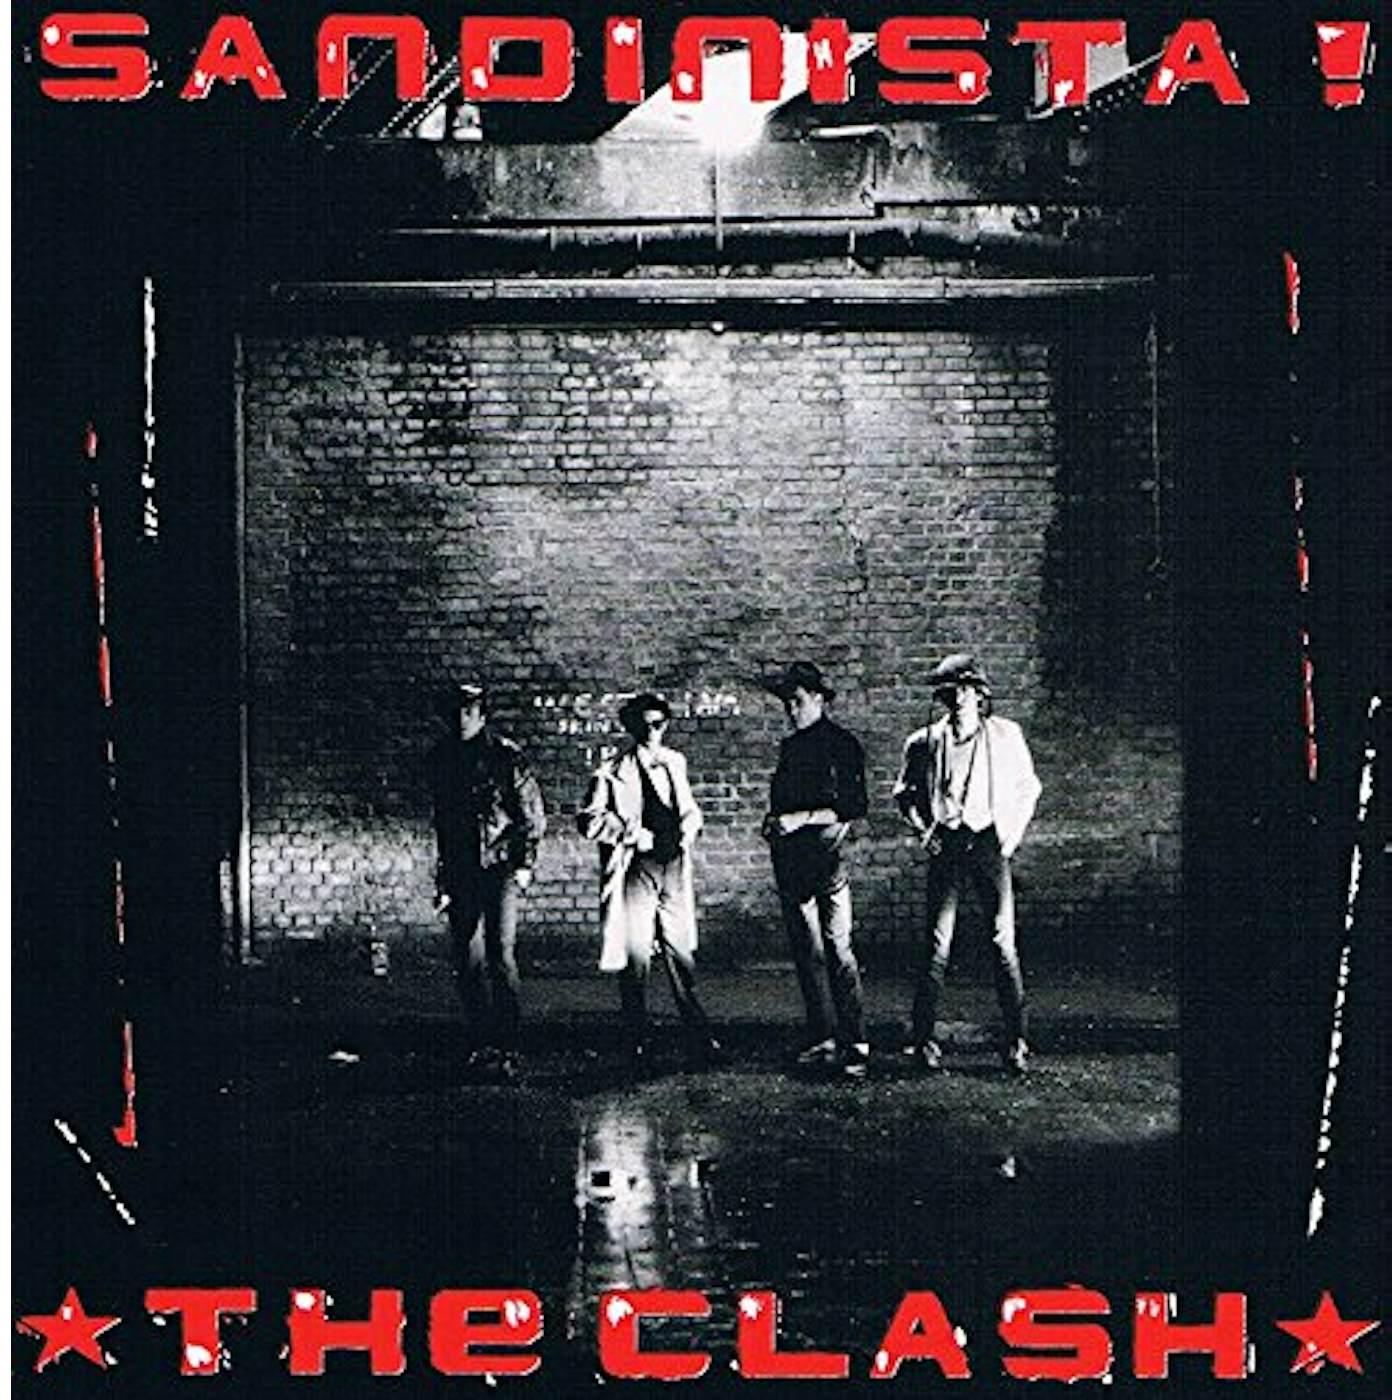 The Clash Sandinista! Vinyl Record